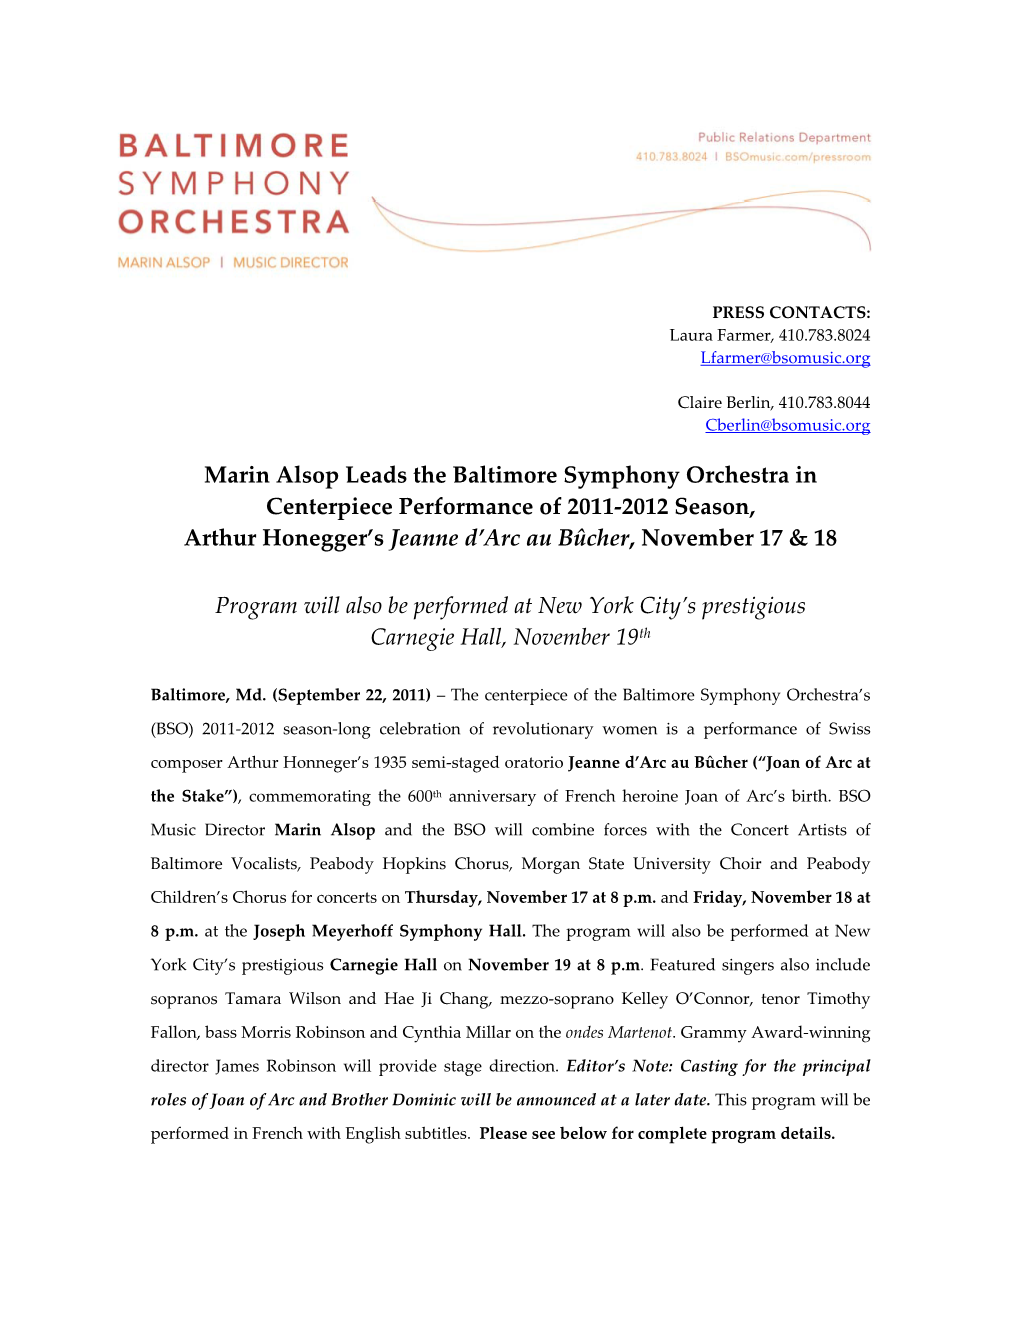 Marin Alsop Leads the Baltimore Symphony Orchestra in Centerpiece Performance of 2011‐2012 Season, Arthur Honegger’S Jeanne D’Arc Au Bûcher, November 17 & 18